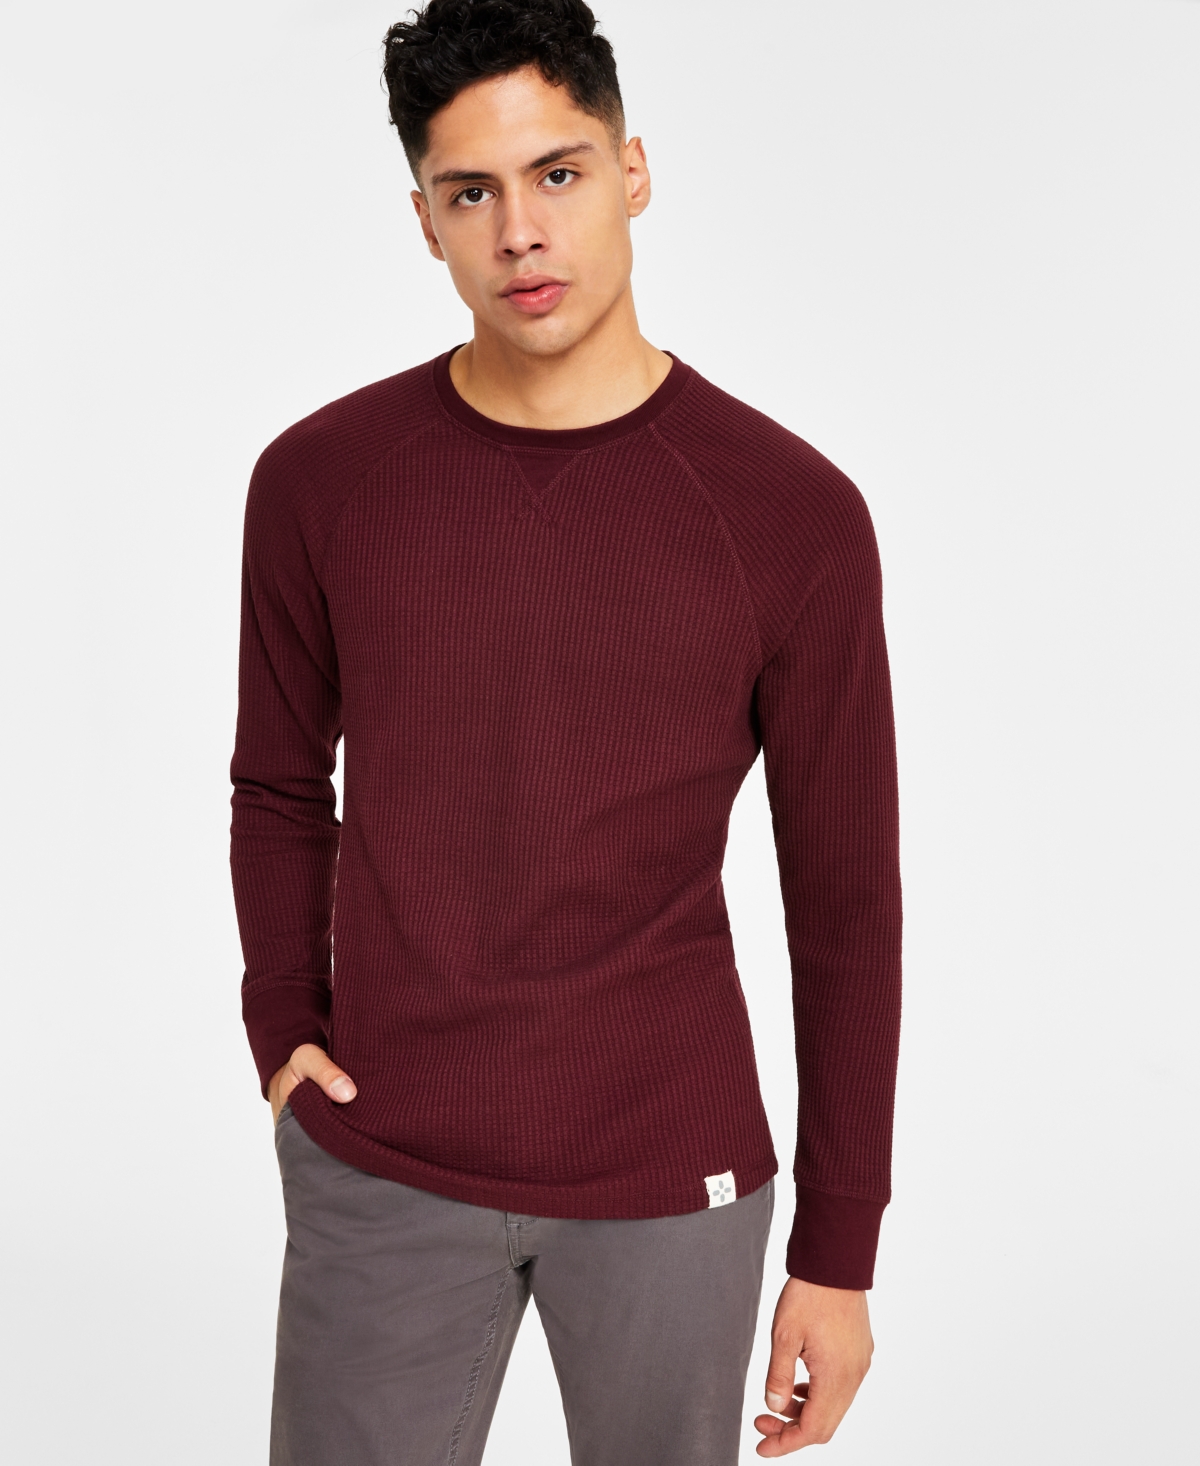 Men's Long-Sleeve Thermal Shirt, Created for Macy's - Dark Scarlet